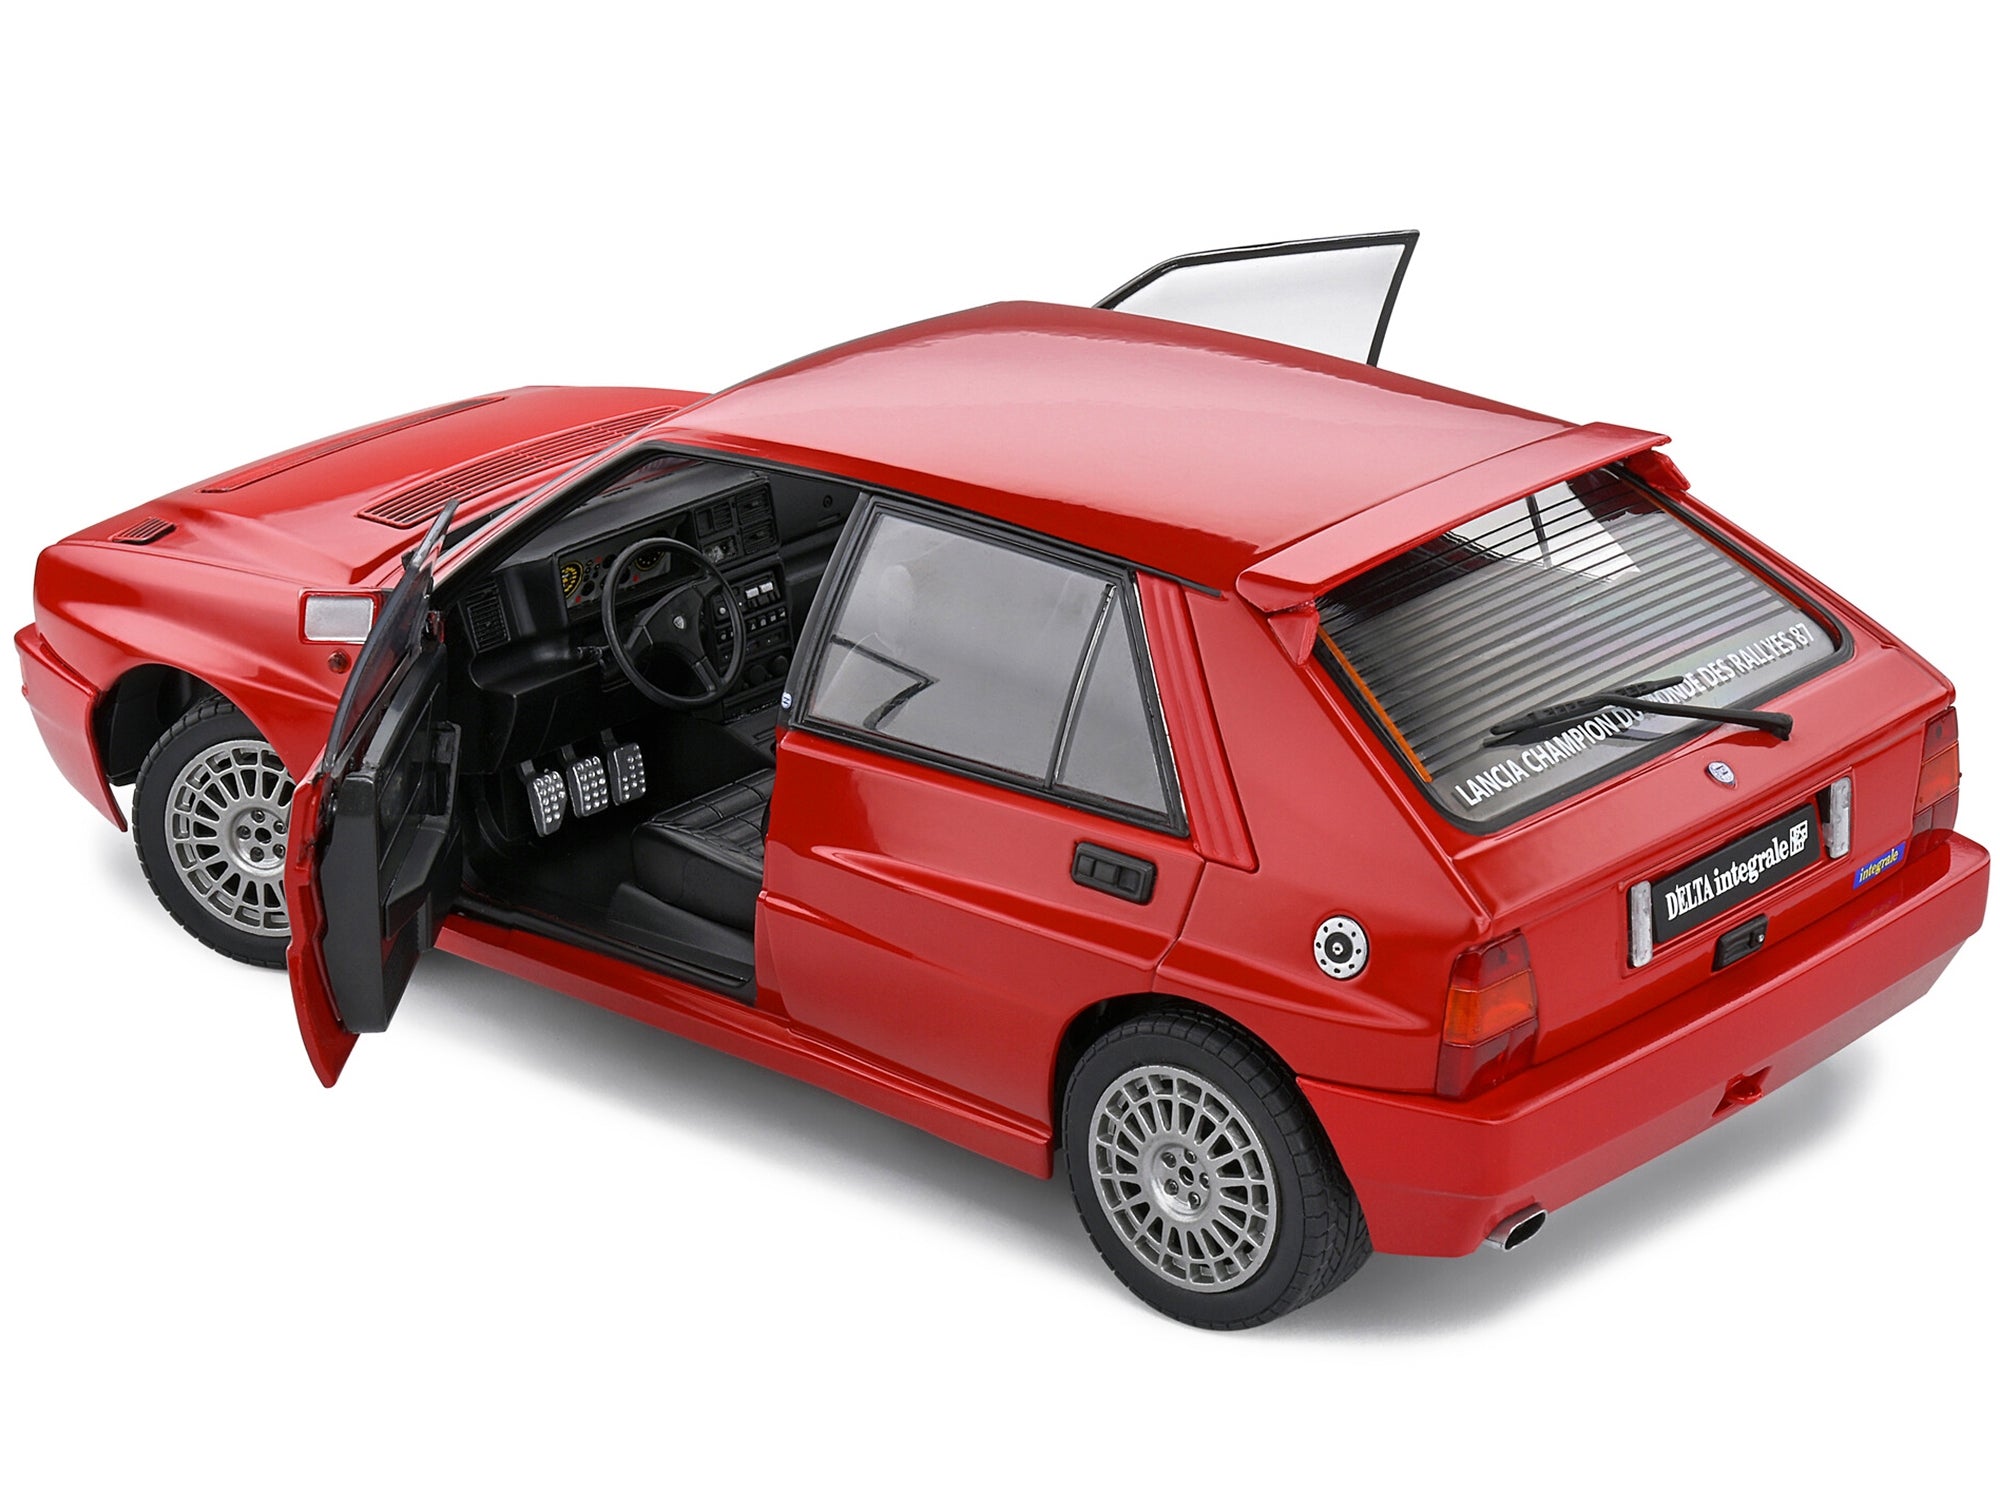 1991 Lancia Delta HF Integrale Rosso Corsa Red 1/18 Diecast Model Car by Solido Solido